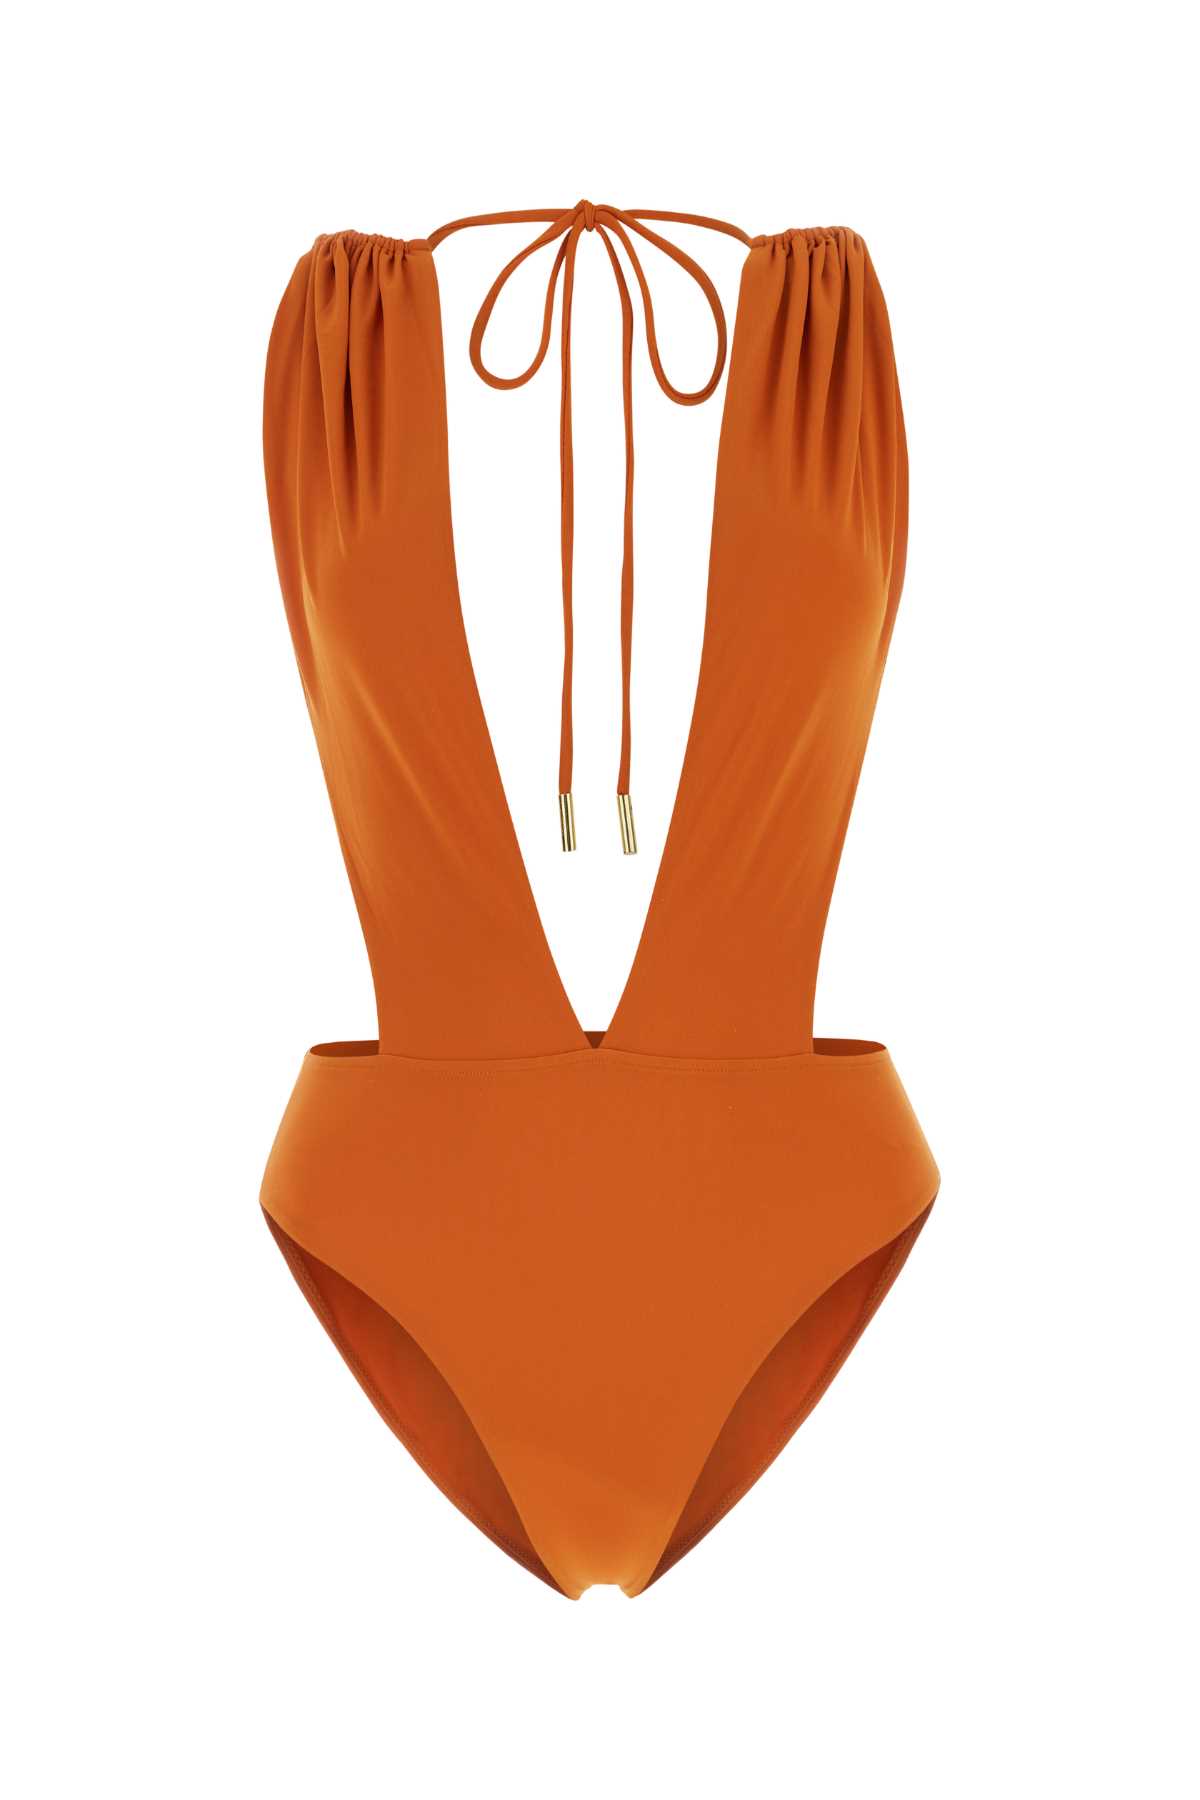 Saint Laurent Orange Stretch Nylon Swimsuit